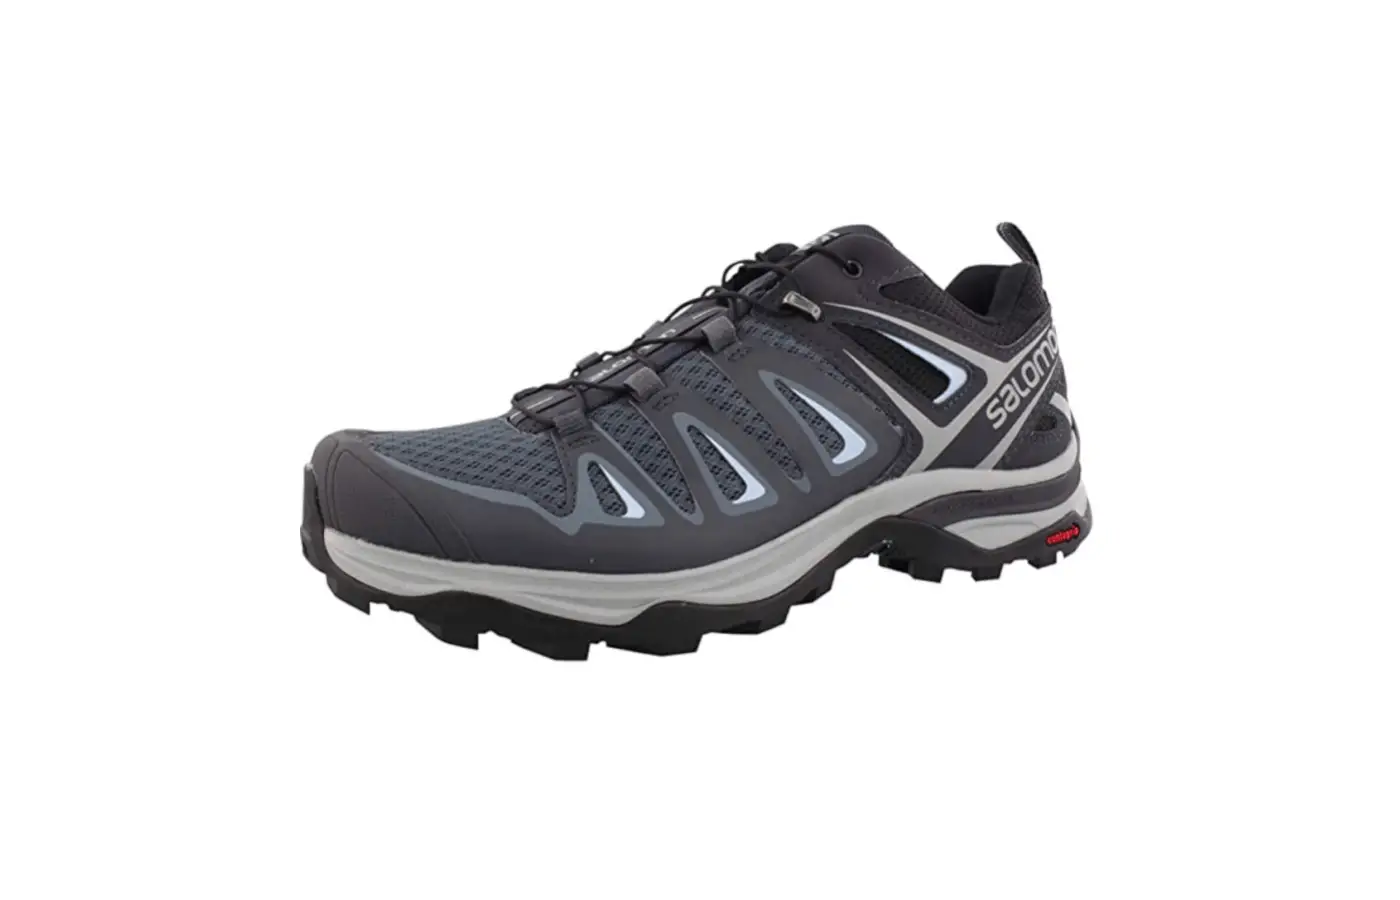 Salomon X Ultra 3 Hiking Shoes